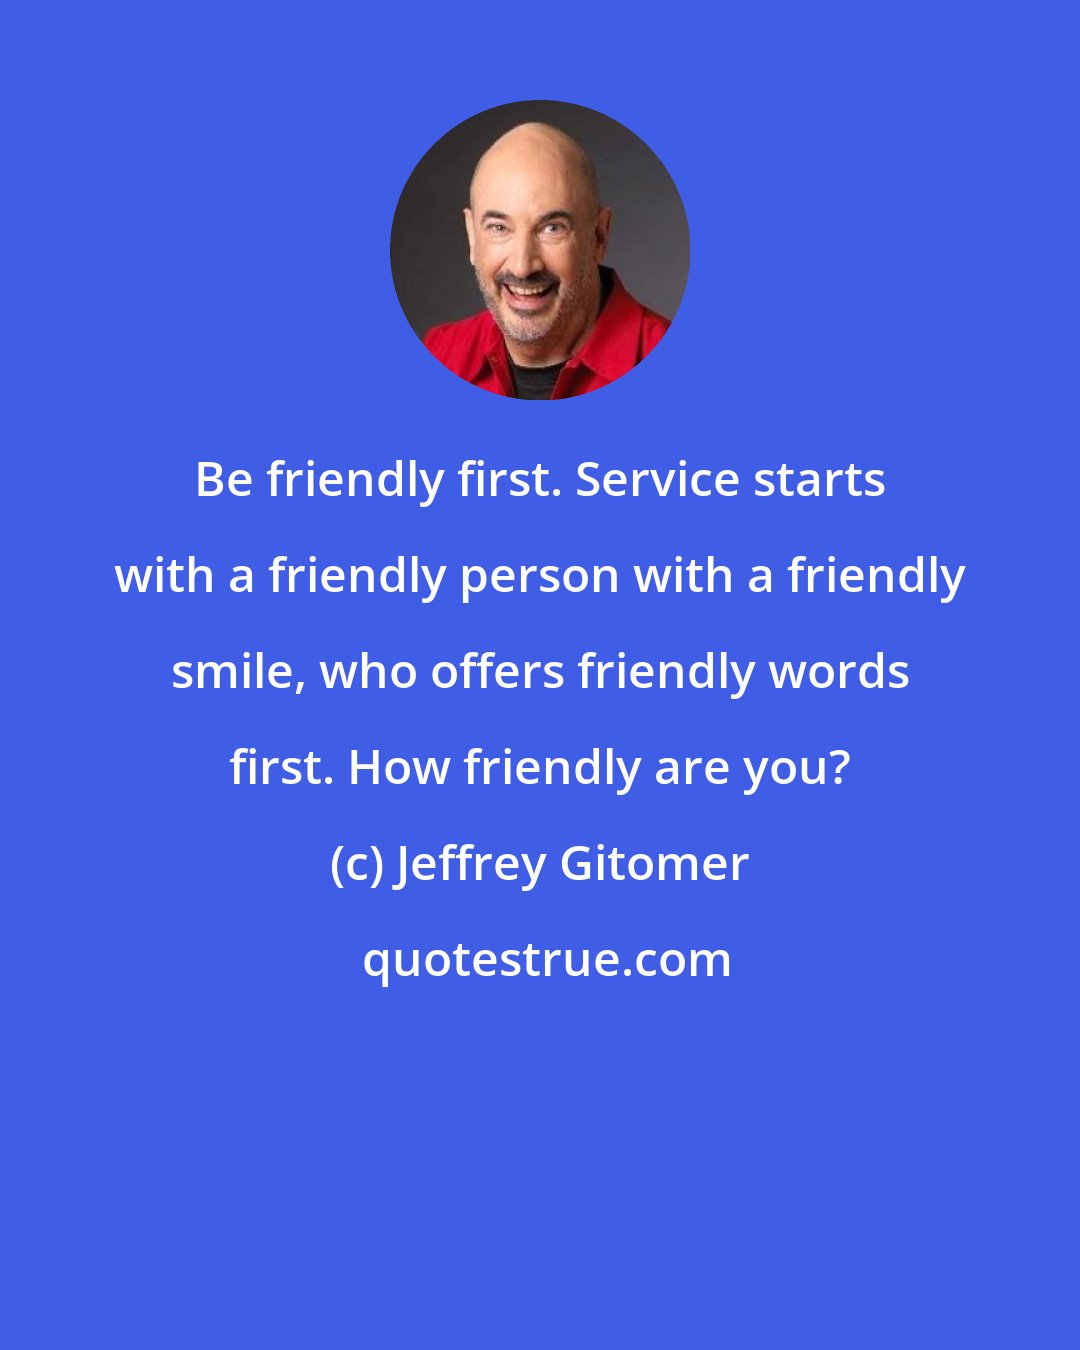 Jeffrey Gitomer: Be friendly first. Service starts with a friendly person with a friendly smile, who offers friendly words first. How friendly are you?